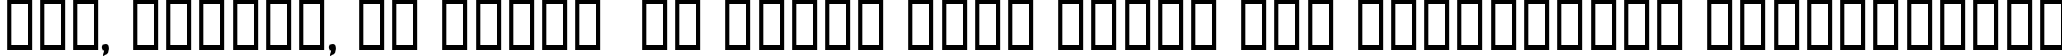 Пример написания шрифтом Haunt AOE текста на украинском